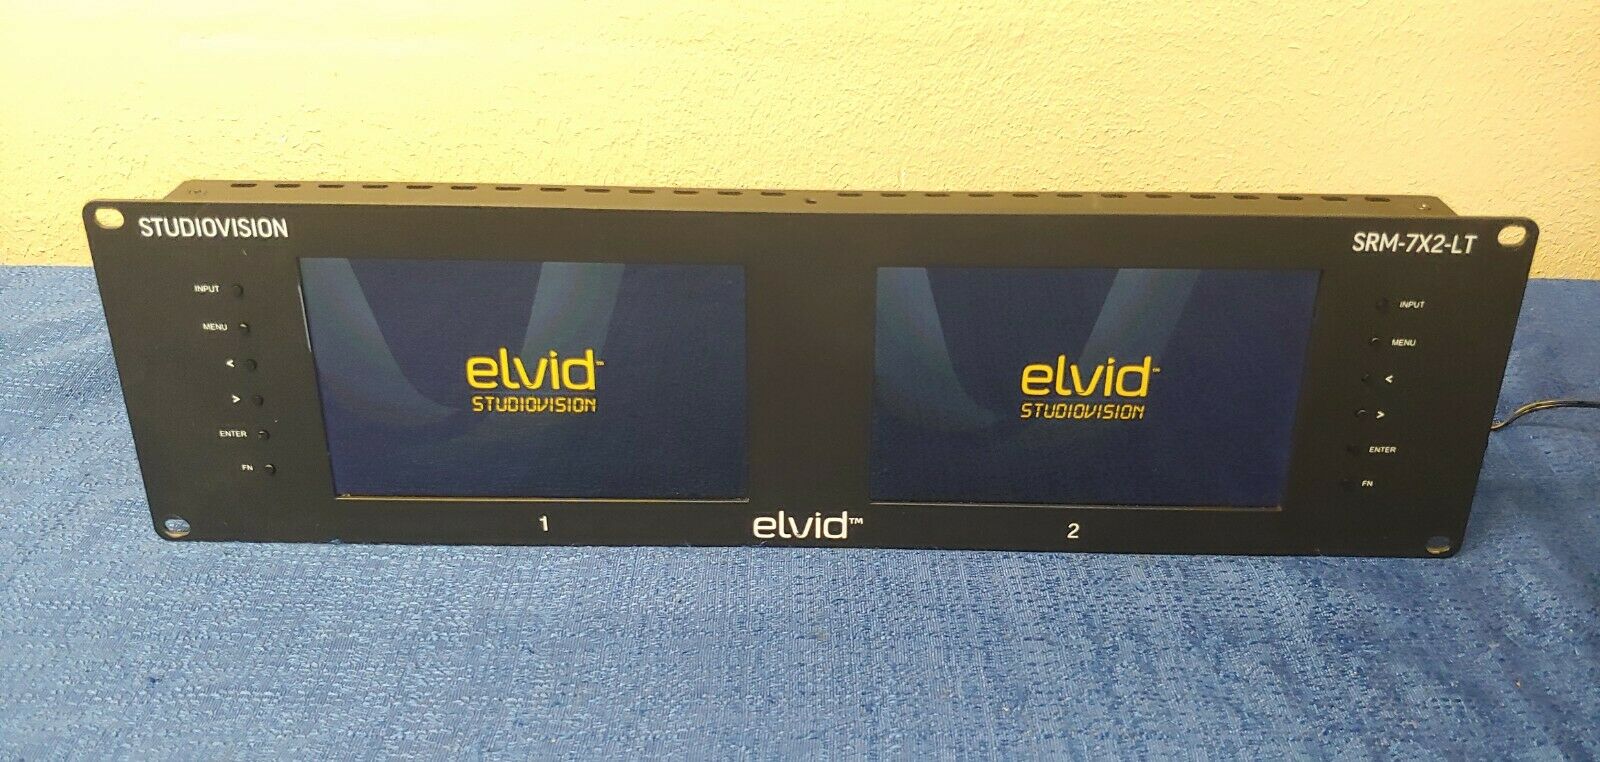 Elvid Studio Vision Dual 7" Monitor Rackmount Srm-7x2-lt